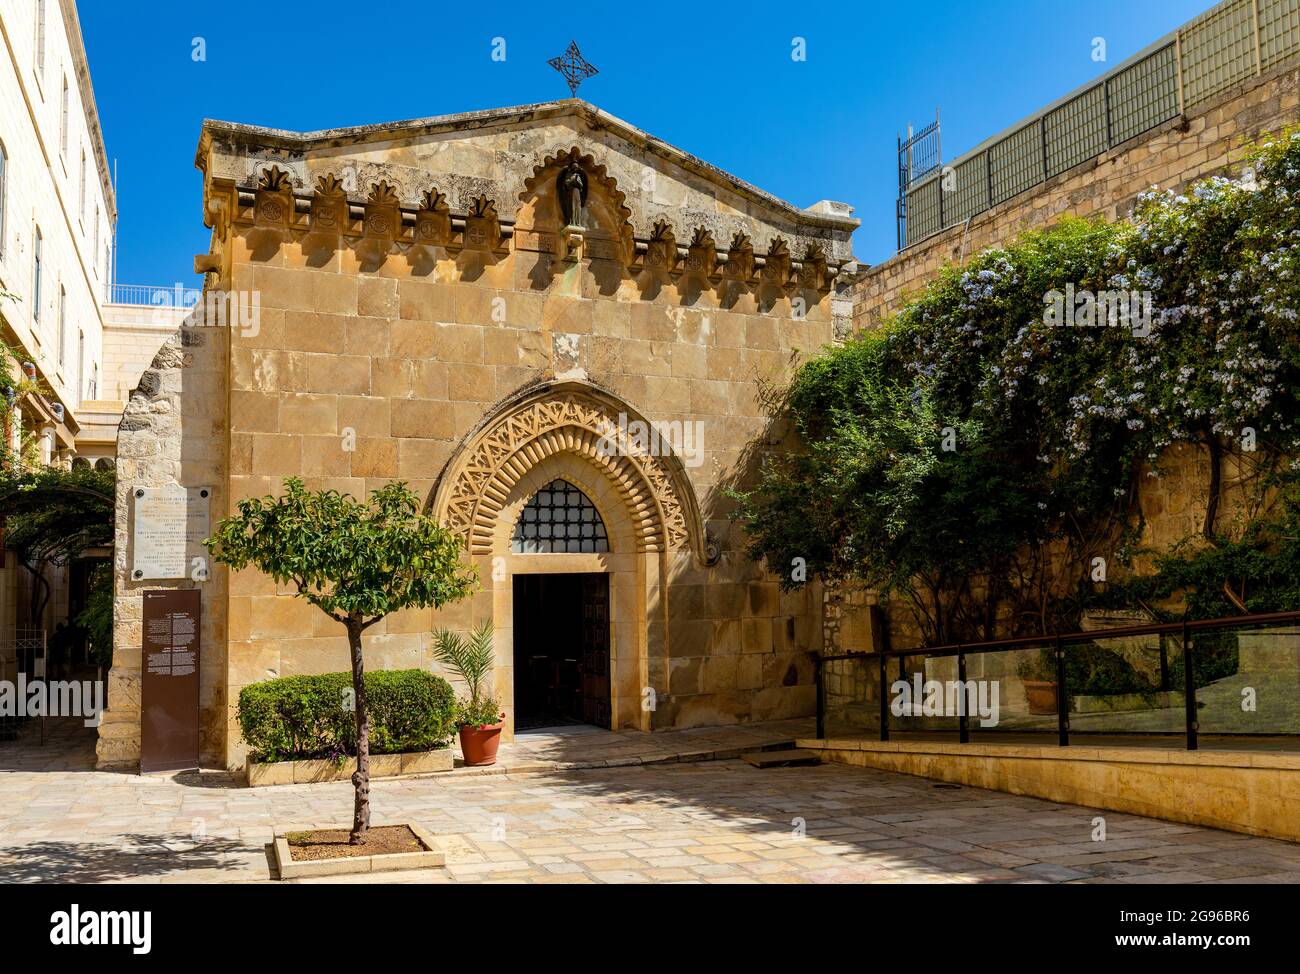 Jerusalem, Israel - October 12, 2017: Facade of medieval Church of the Flagellation at Via Dolorosa street in eastern Islamic quarter of Jerusalem Stock Photo